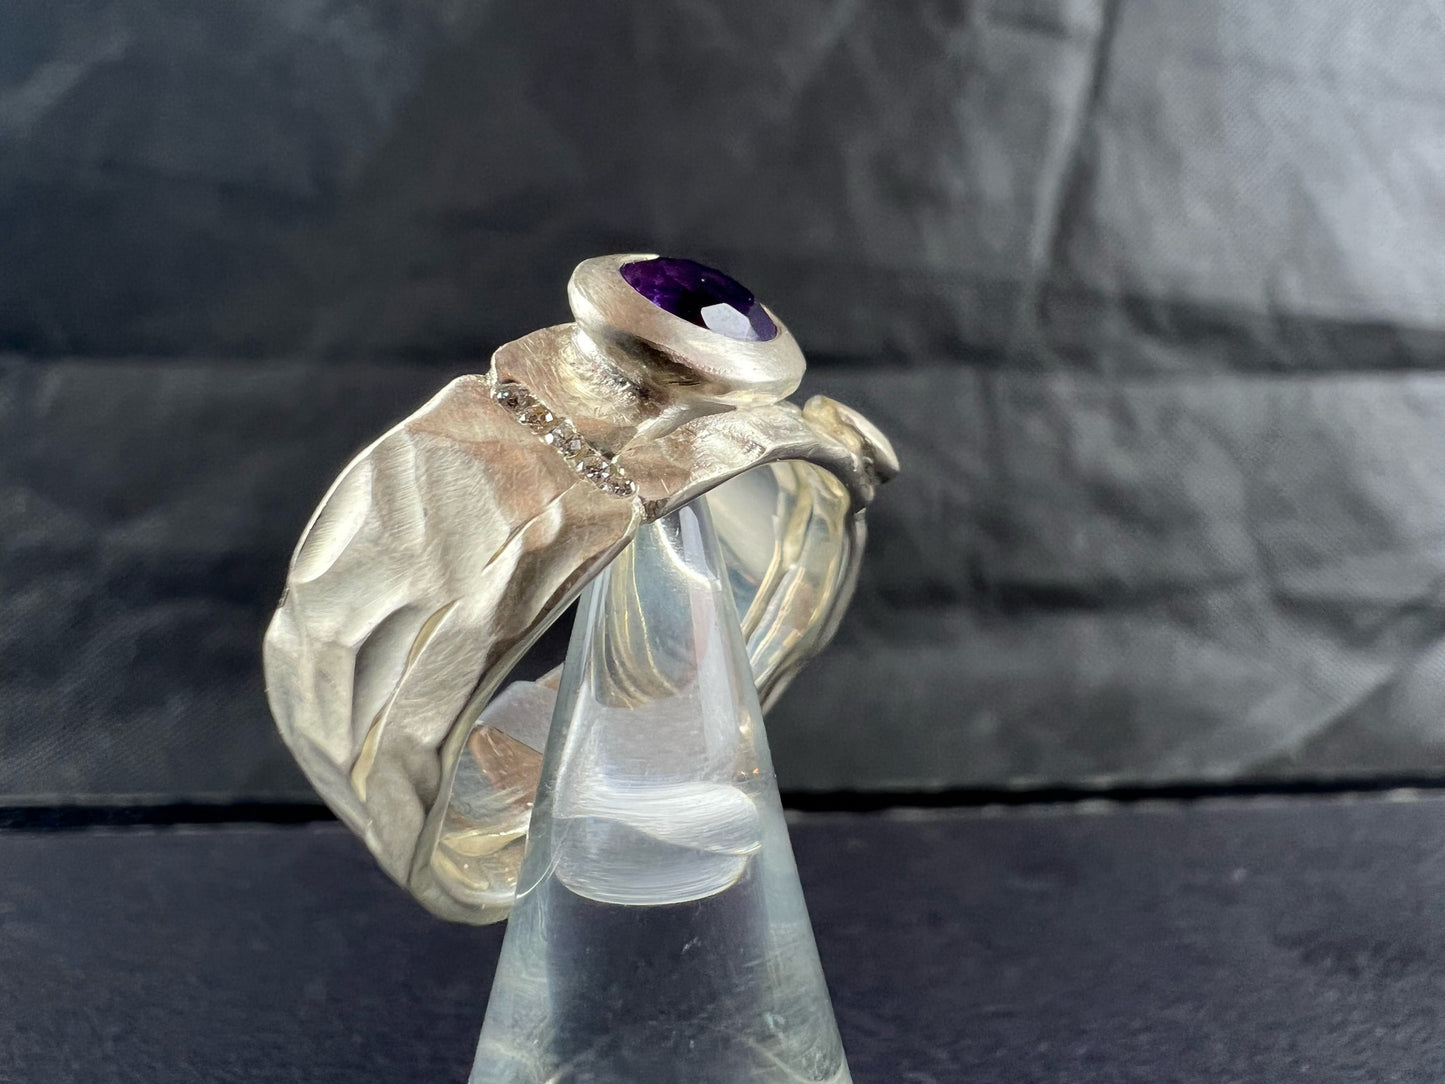 Kelly-Hopkins, Deborah – Silver Ring with Amethyst, Garnet and Diamonds